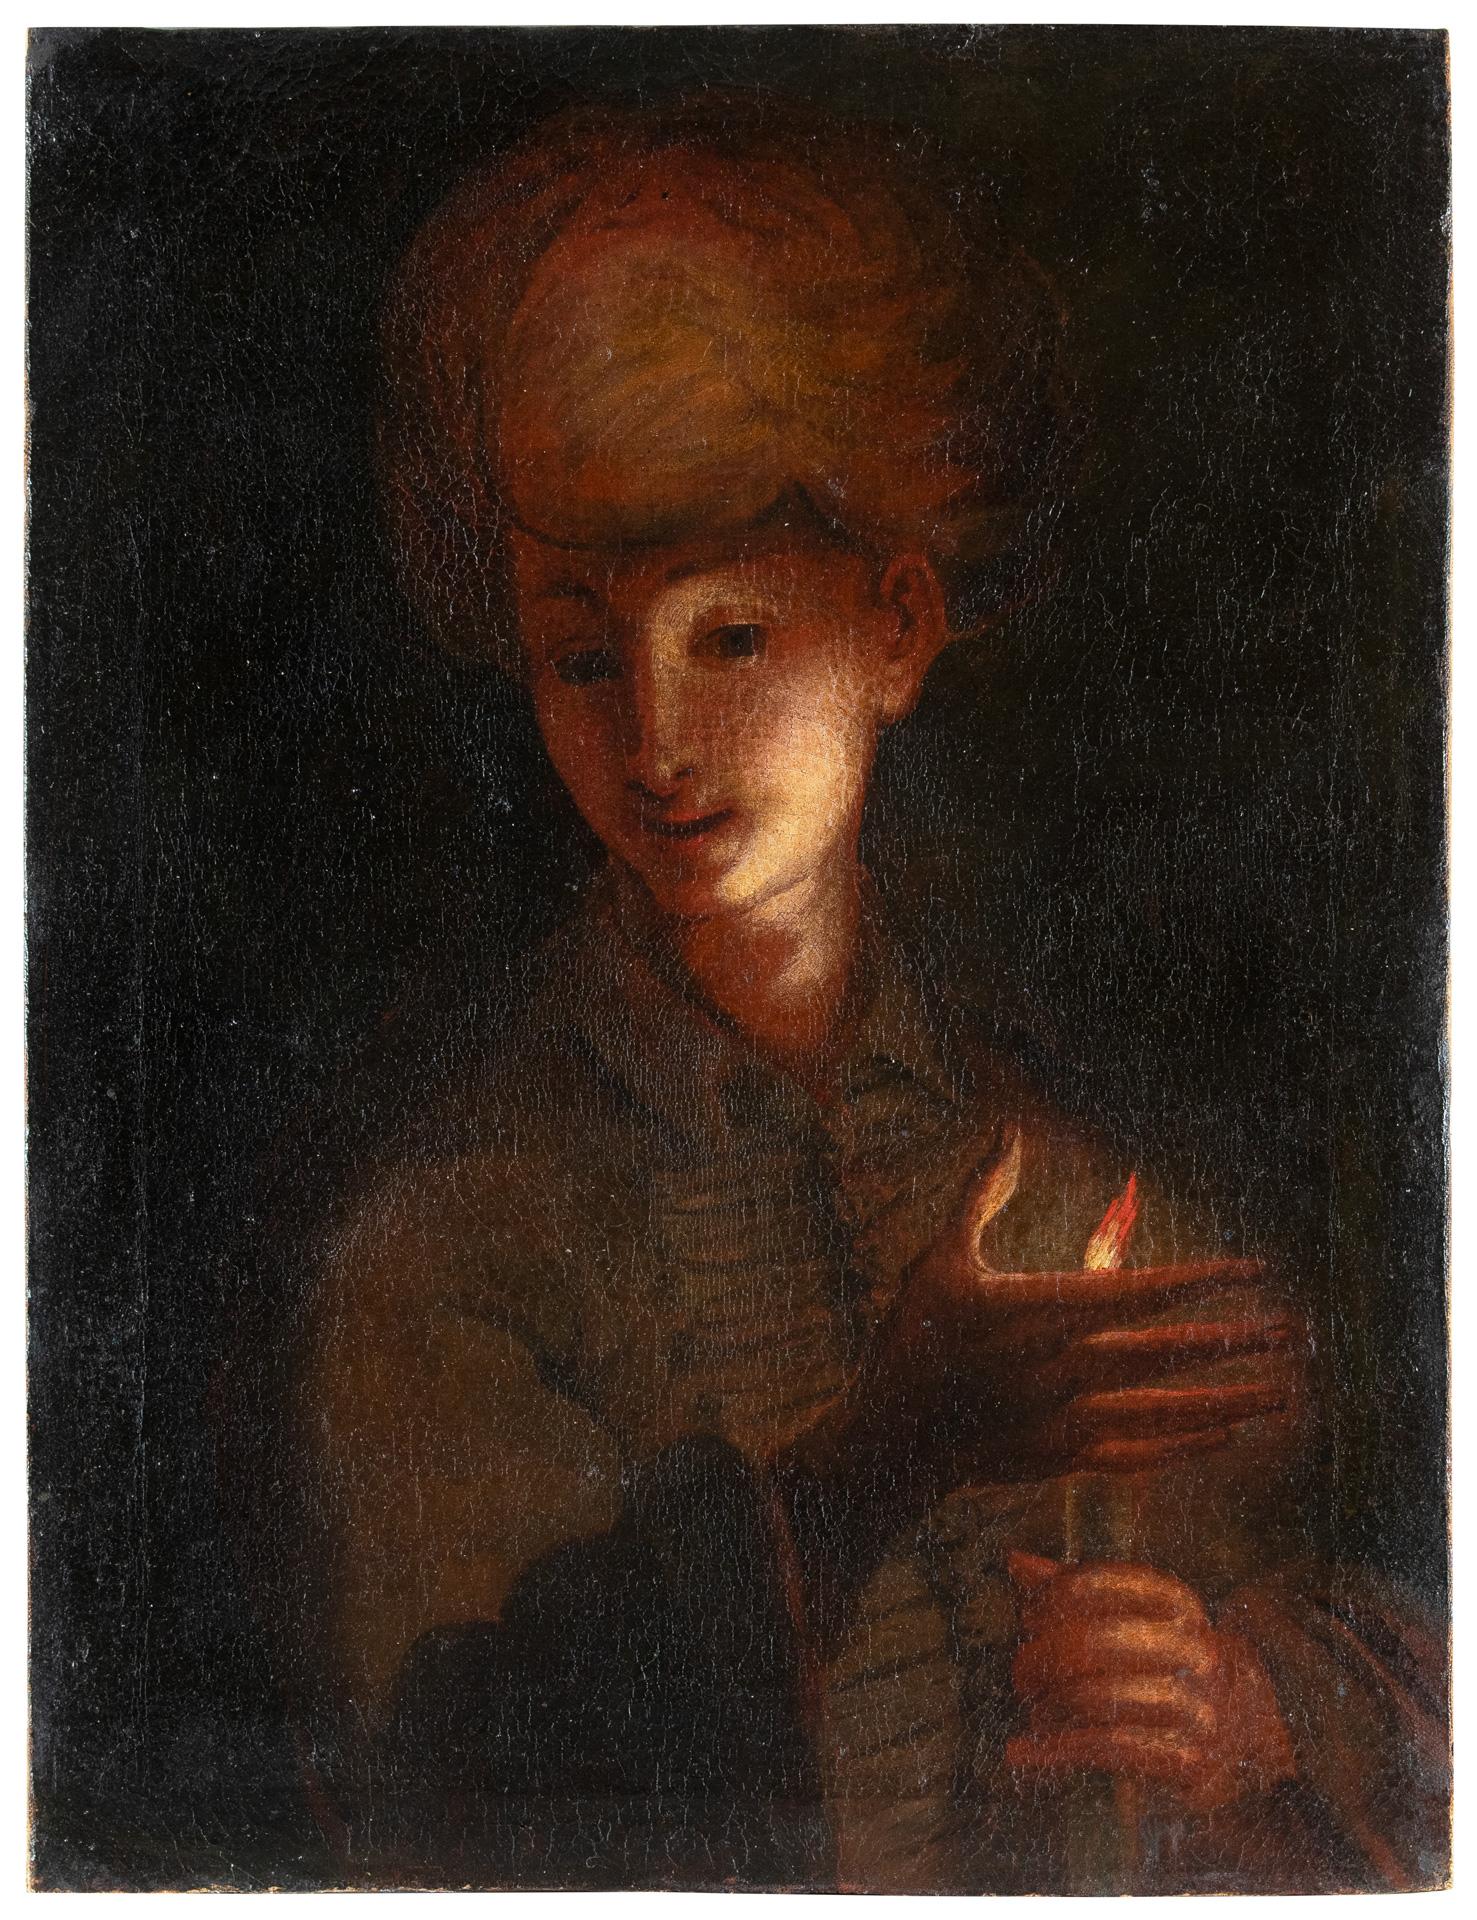 Late 17th century Italian figure painting - Male figure - Oil on canvas LampFire